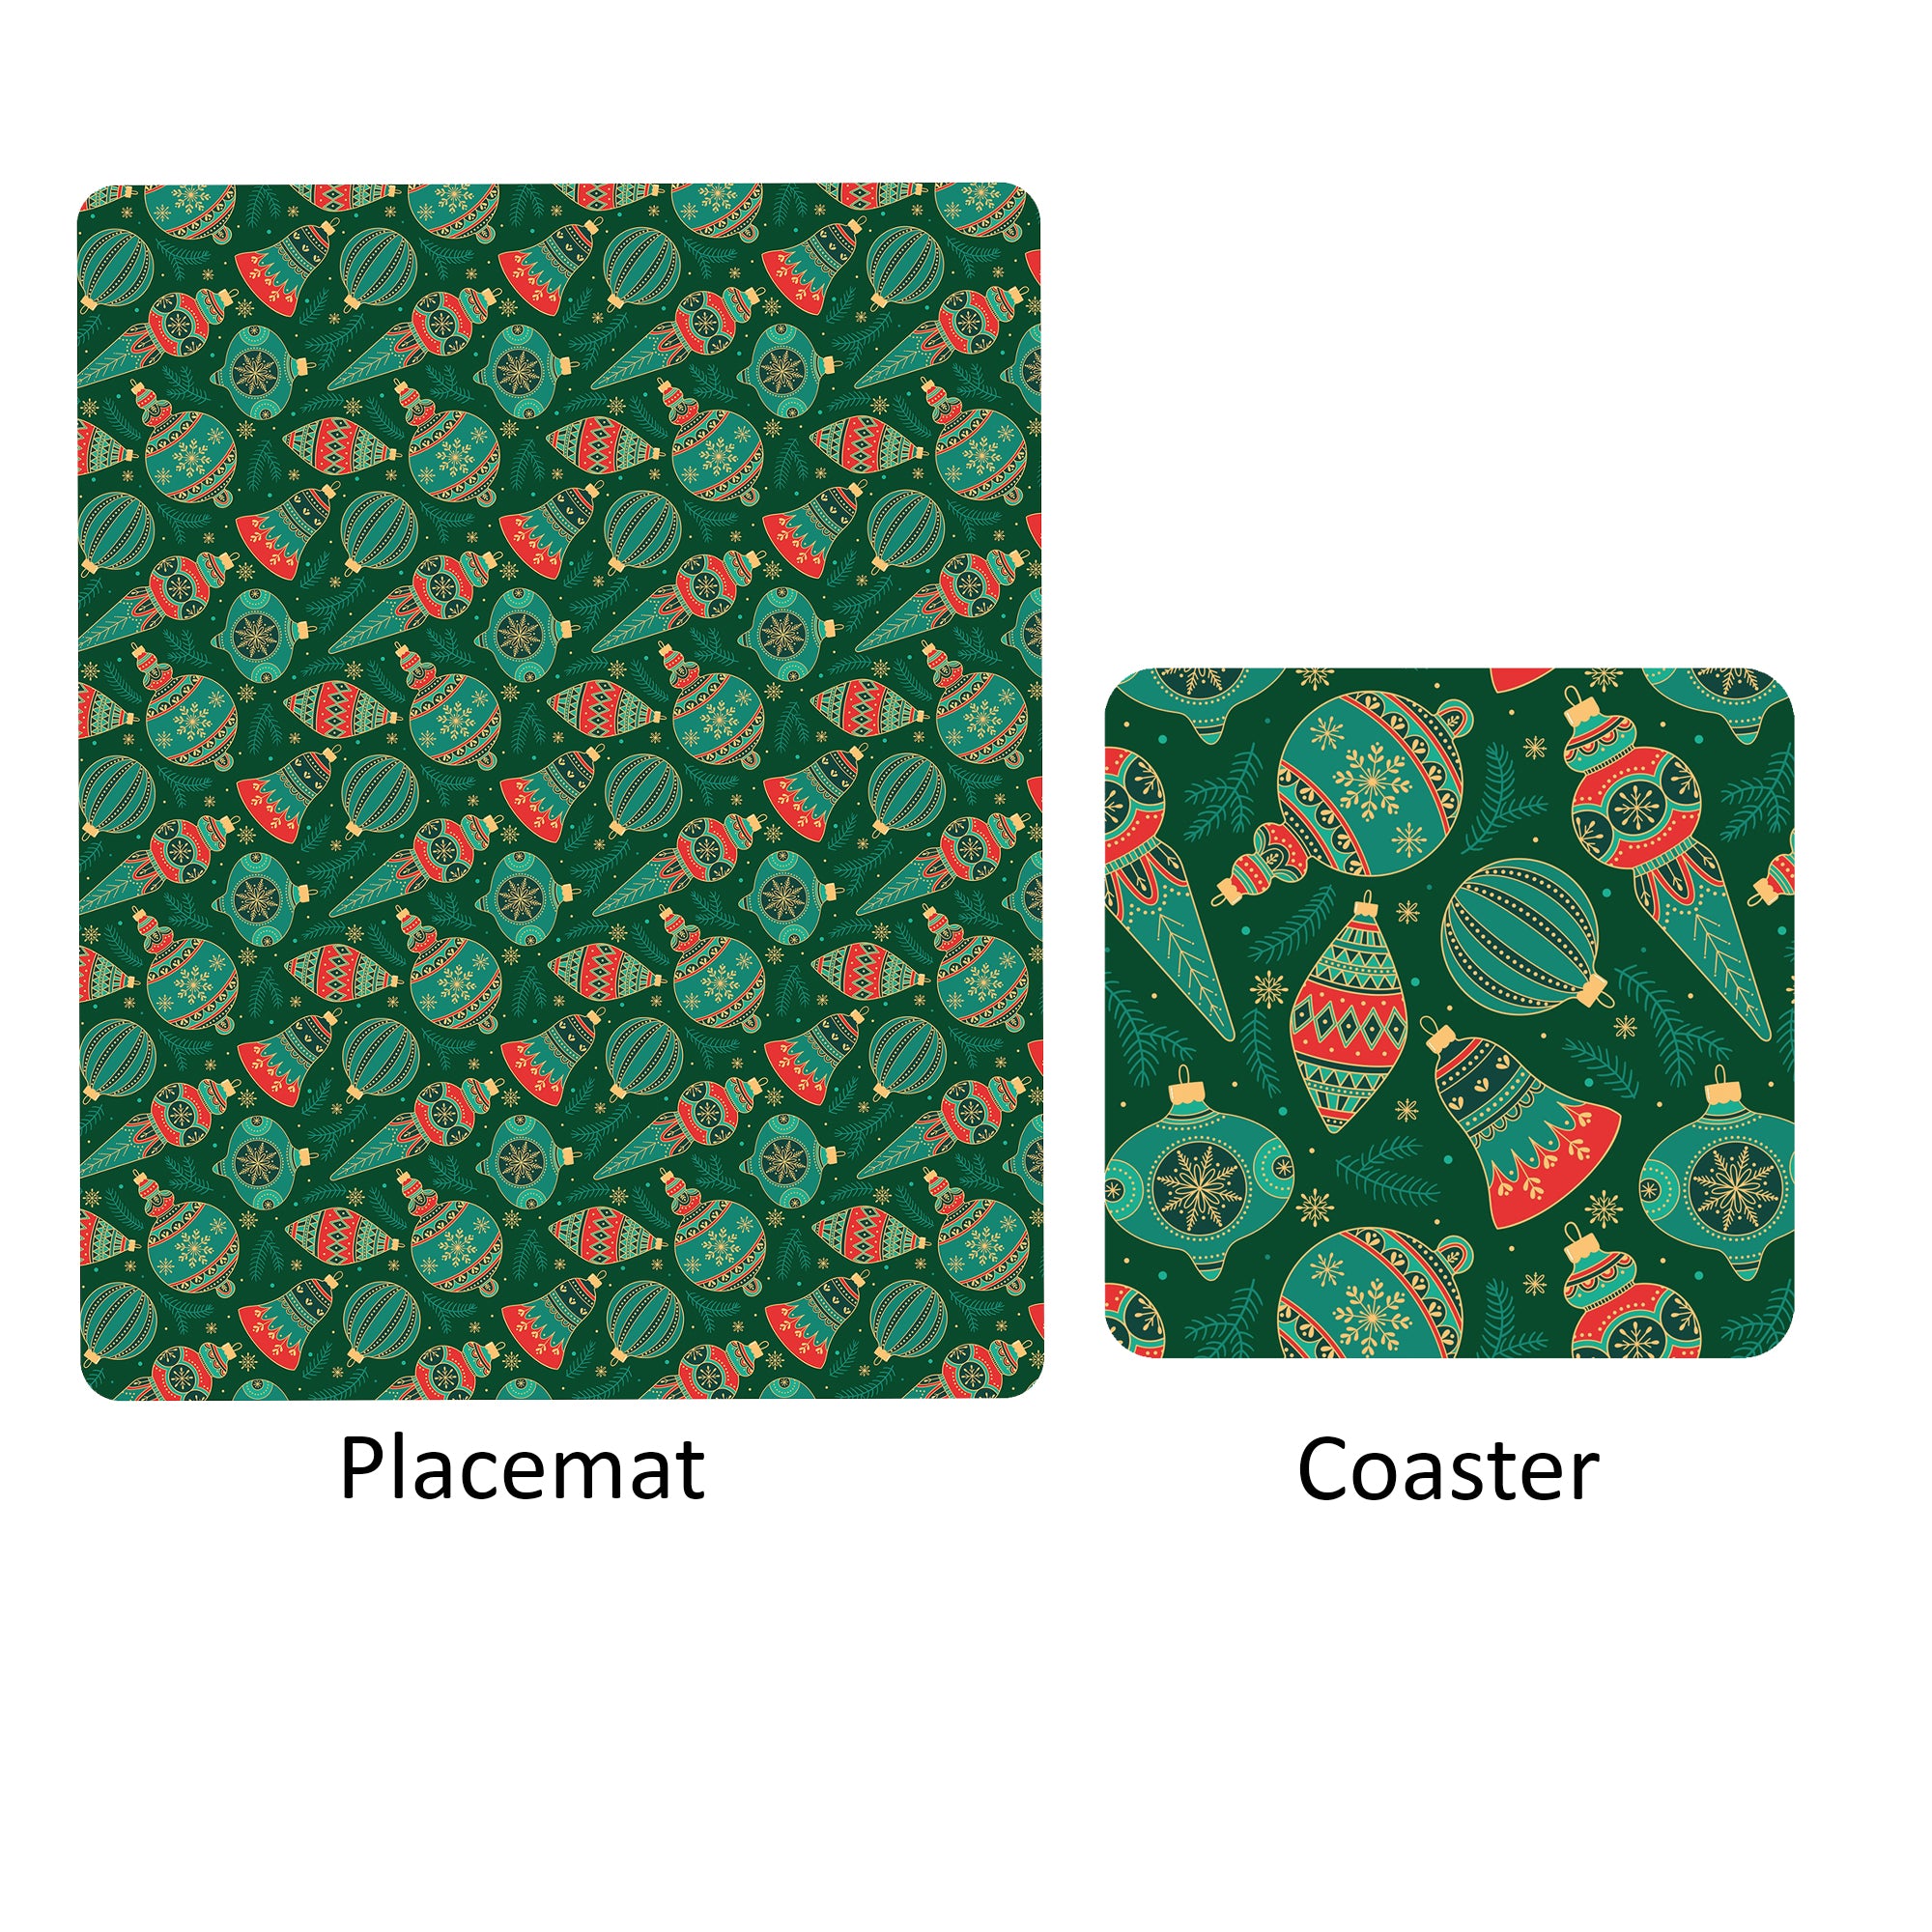 Foil Printed Christmas Placemat & Coaster Set - Christmas Ornaments, W12 x H15inches, W4 x H4inches,  6pc each